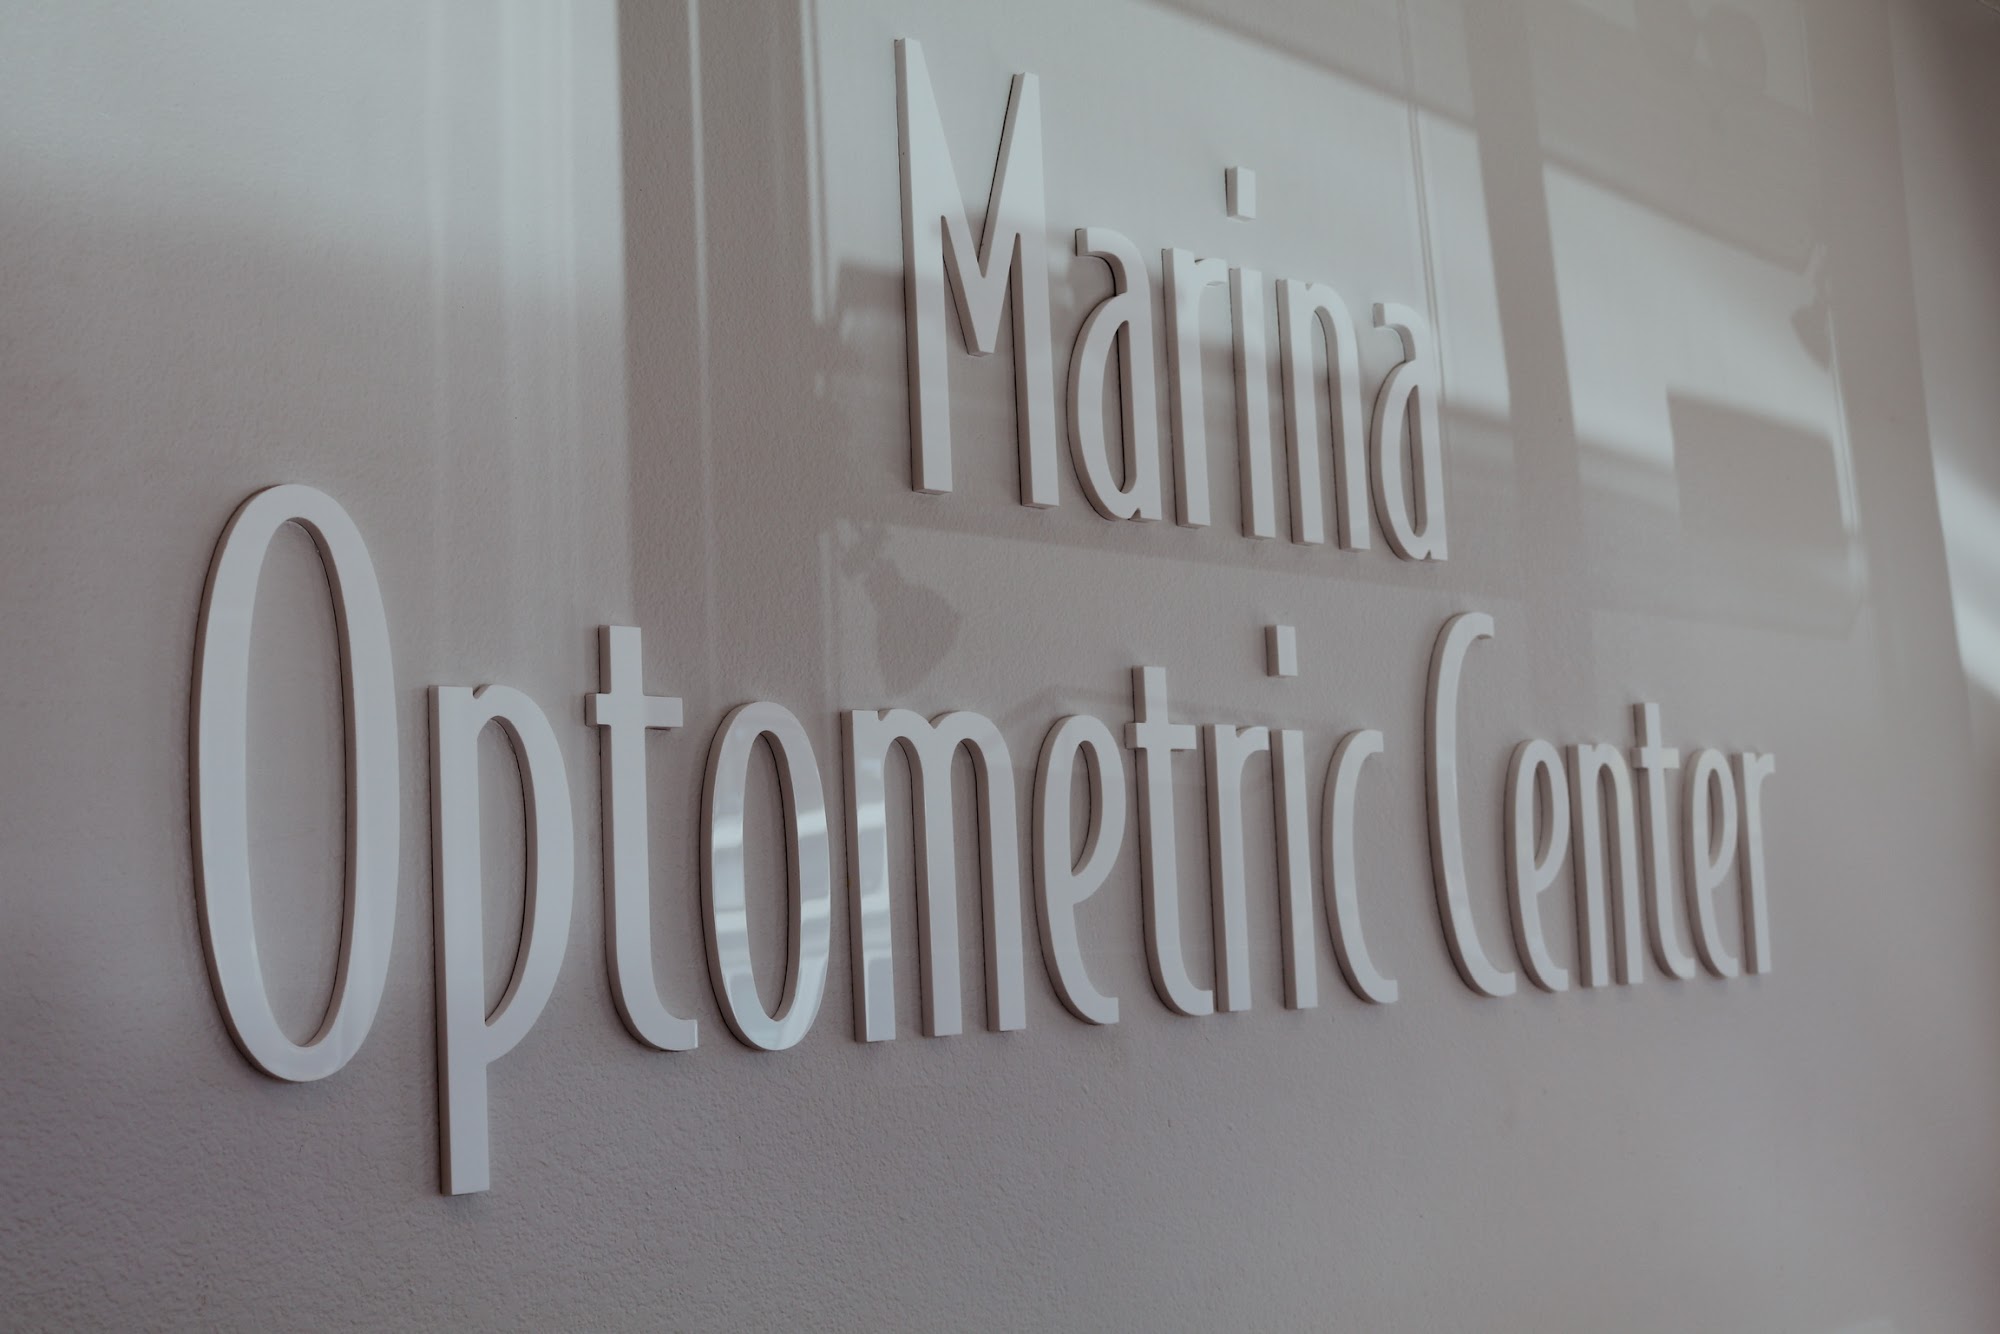 Peninsula Eye Care: Marina Optometric Center 271 Reservation Rd # 202, Marina California 93933